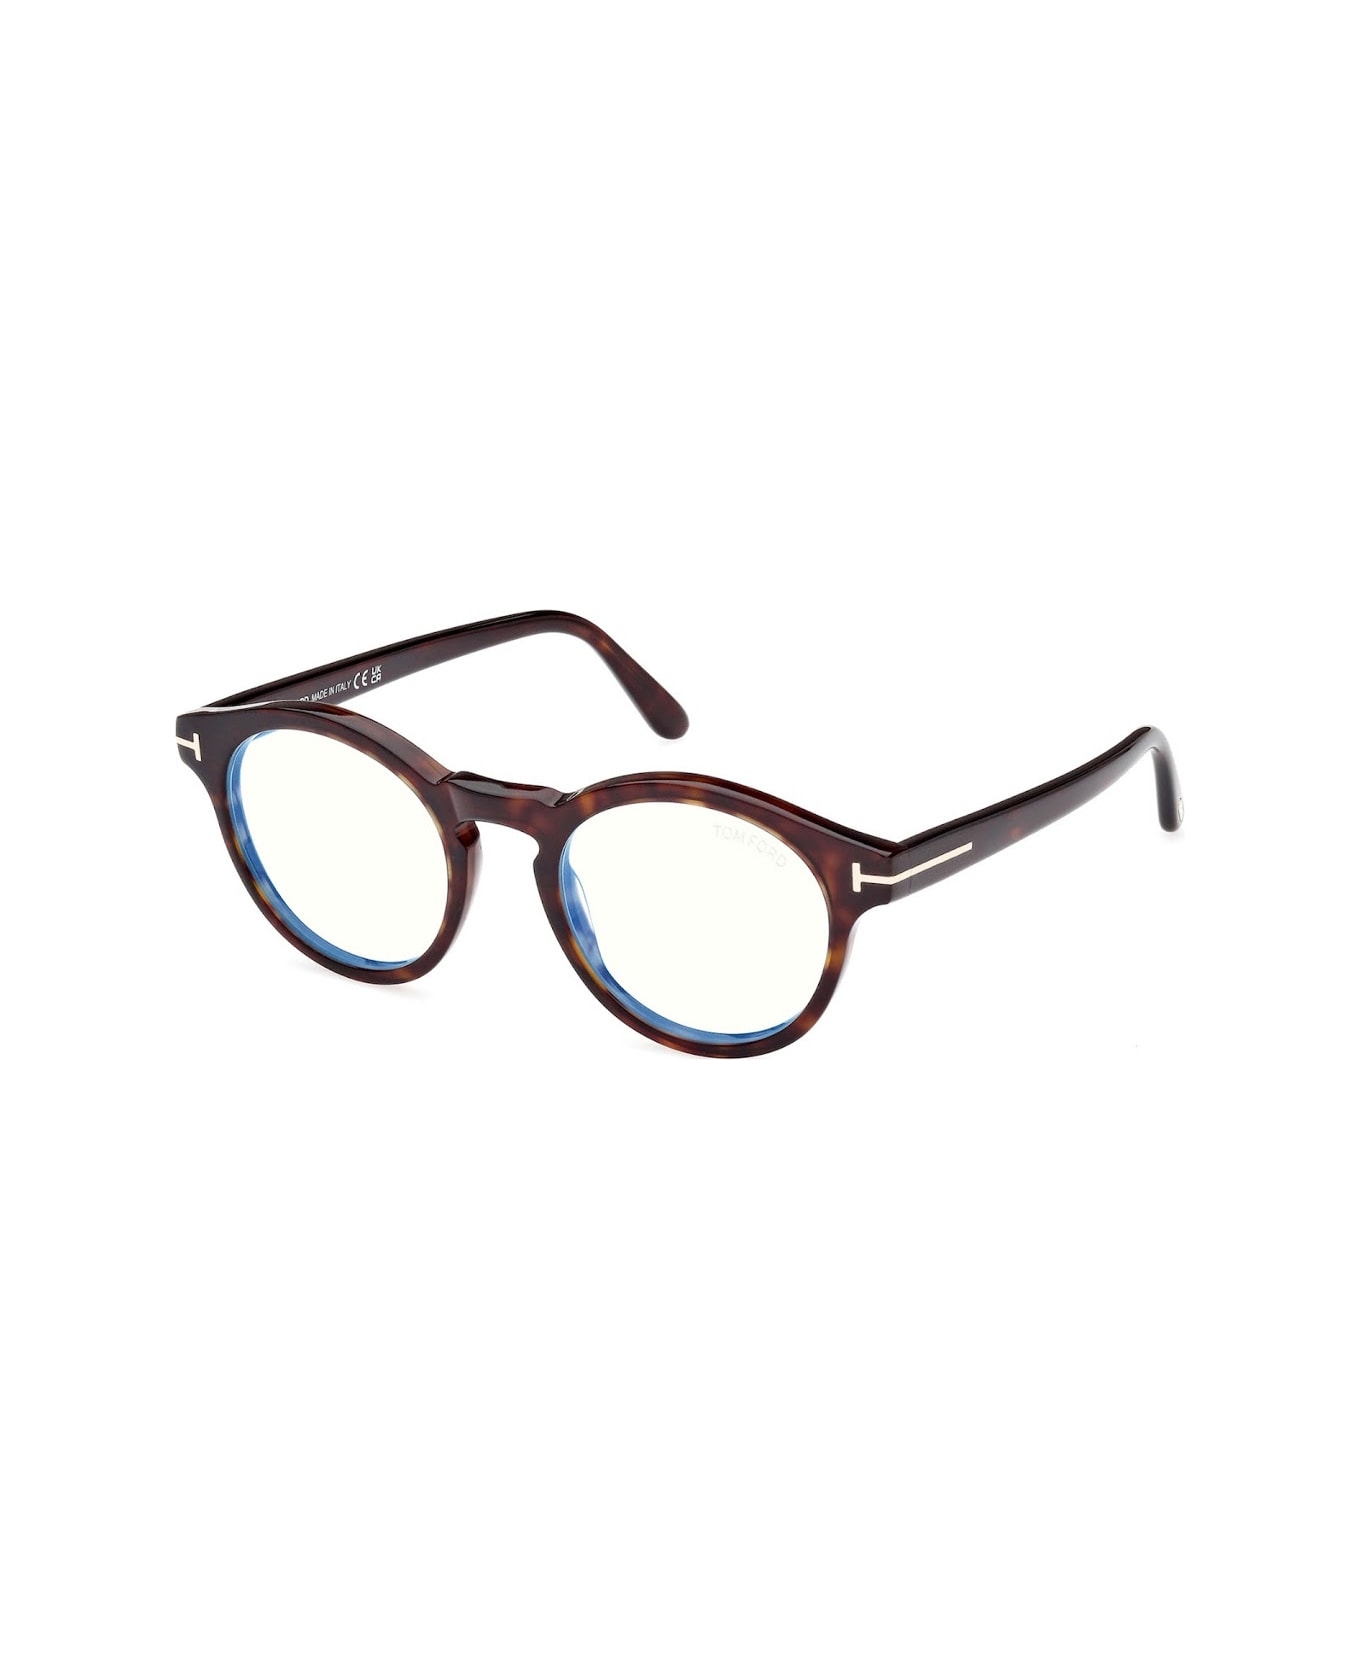 Tom Ford Eyewear TF5887 052 Glasses